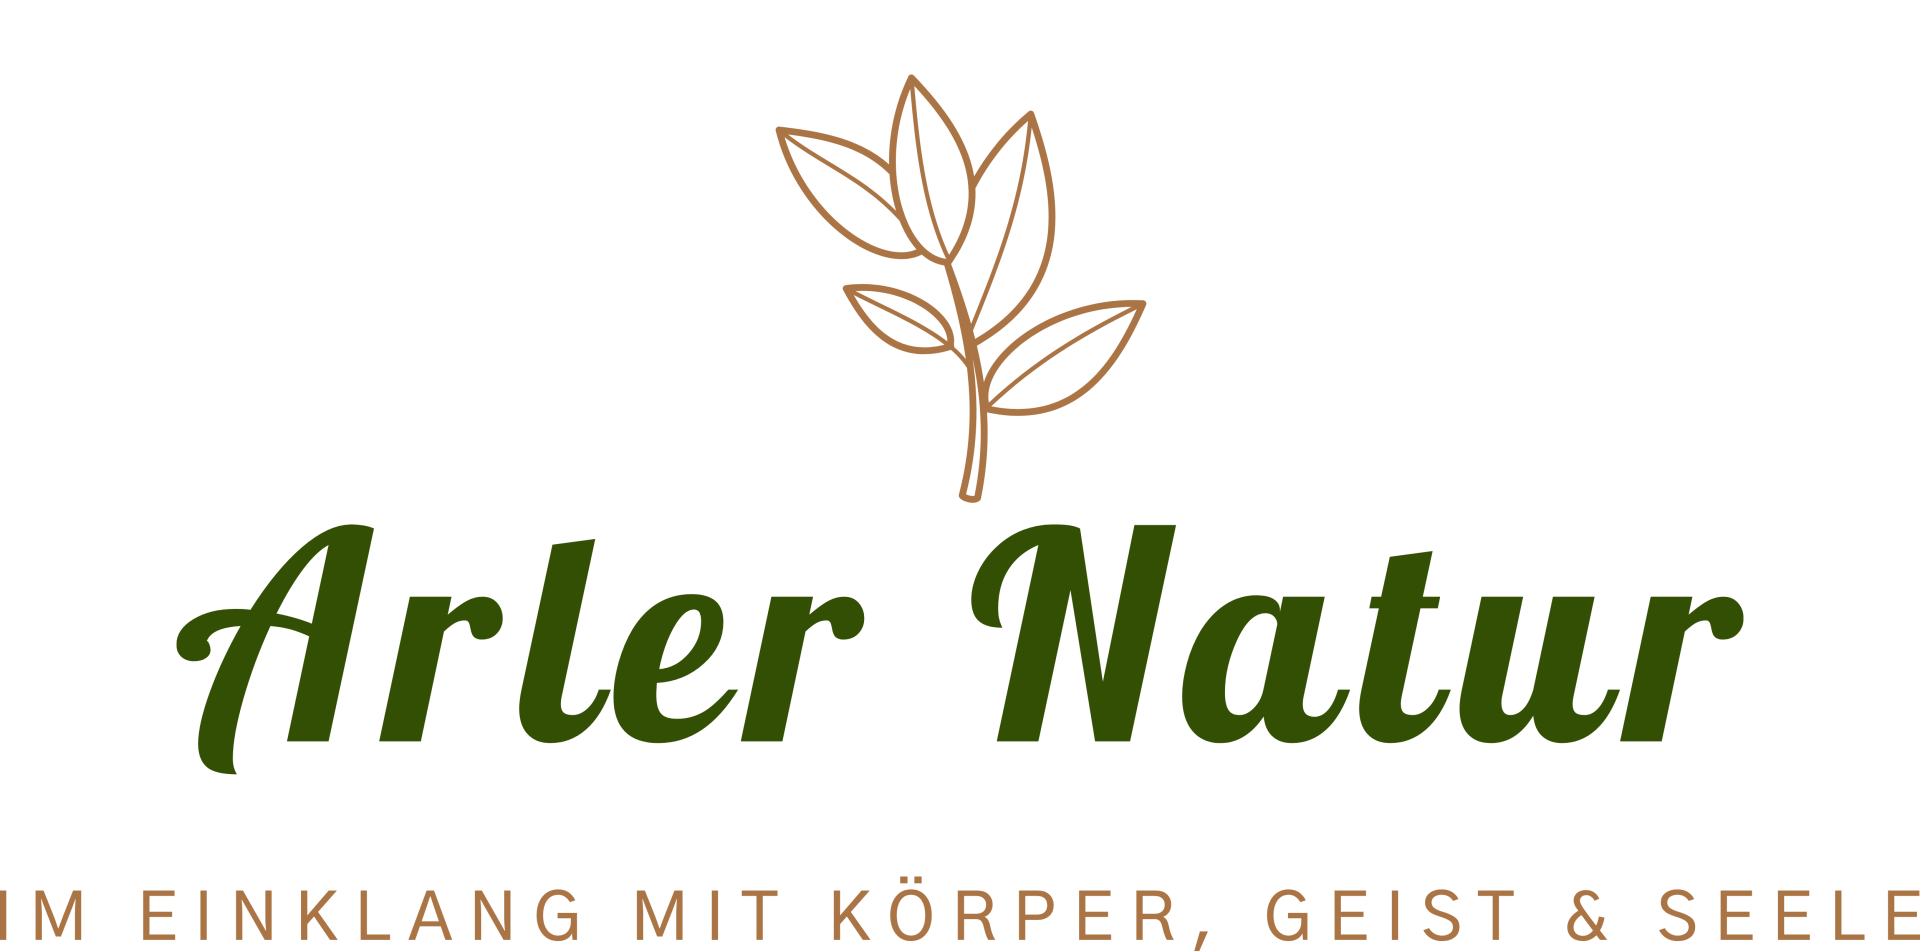 Logo Arler Natur